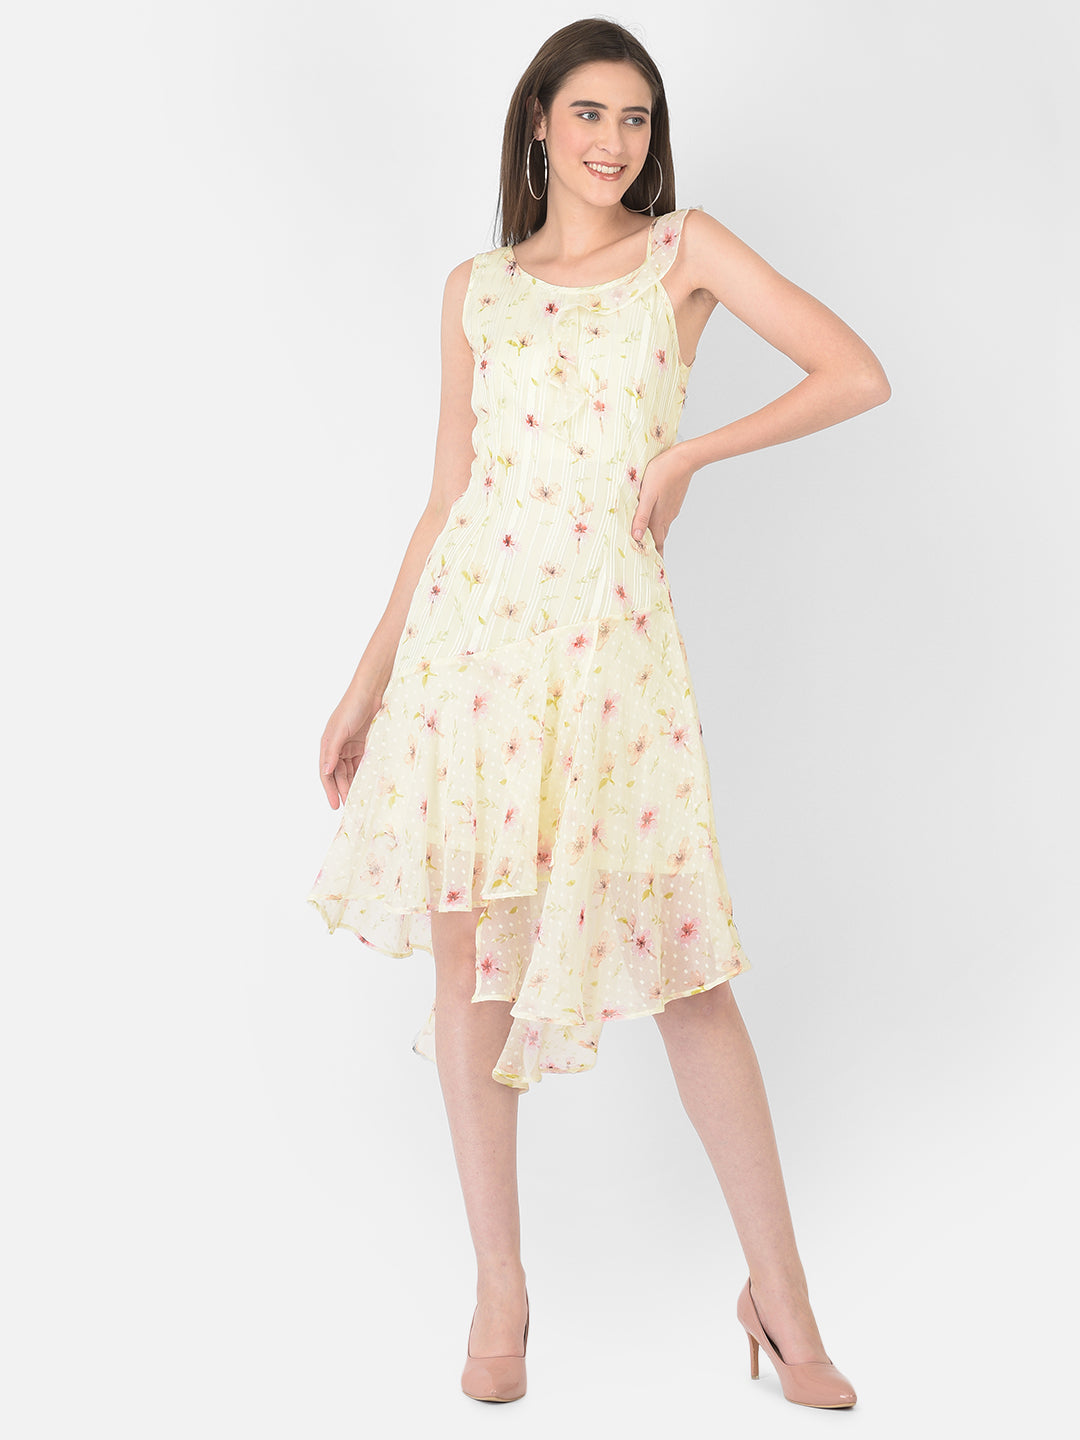 Yellow Sleeveless A-Line Printed Dress